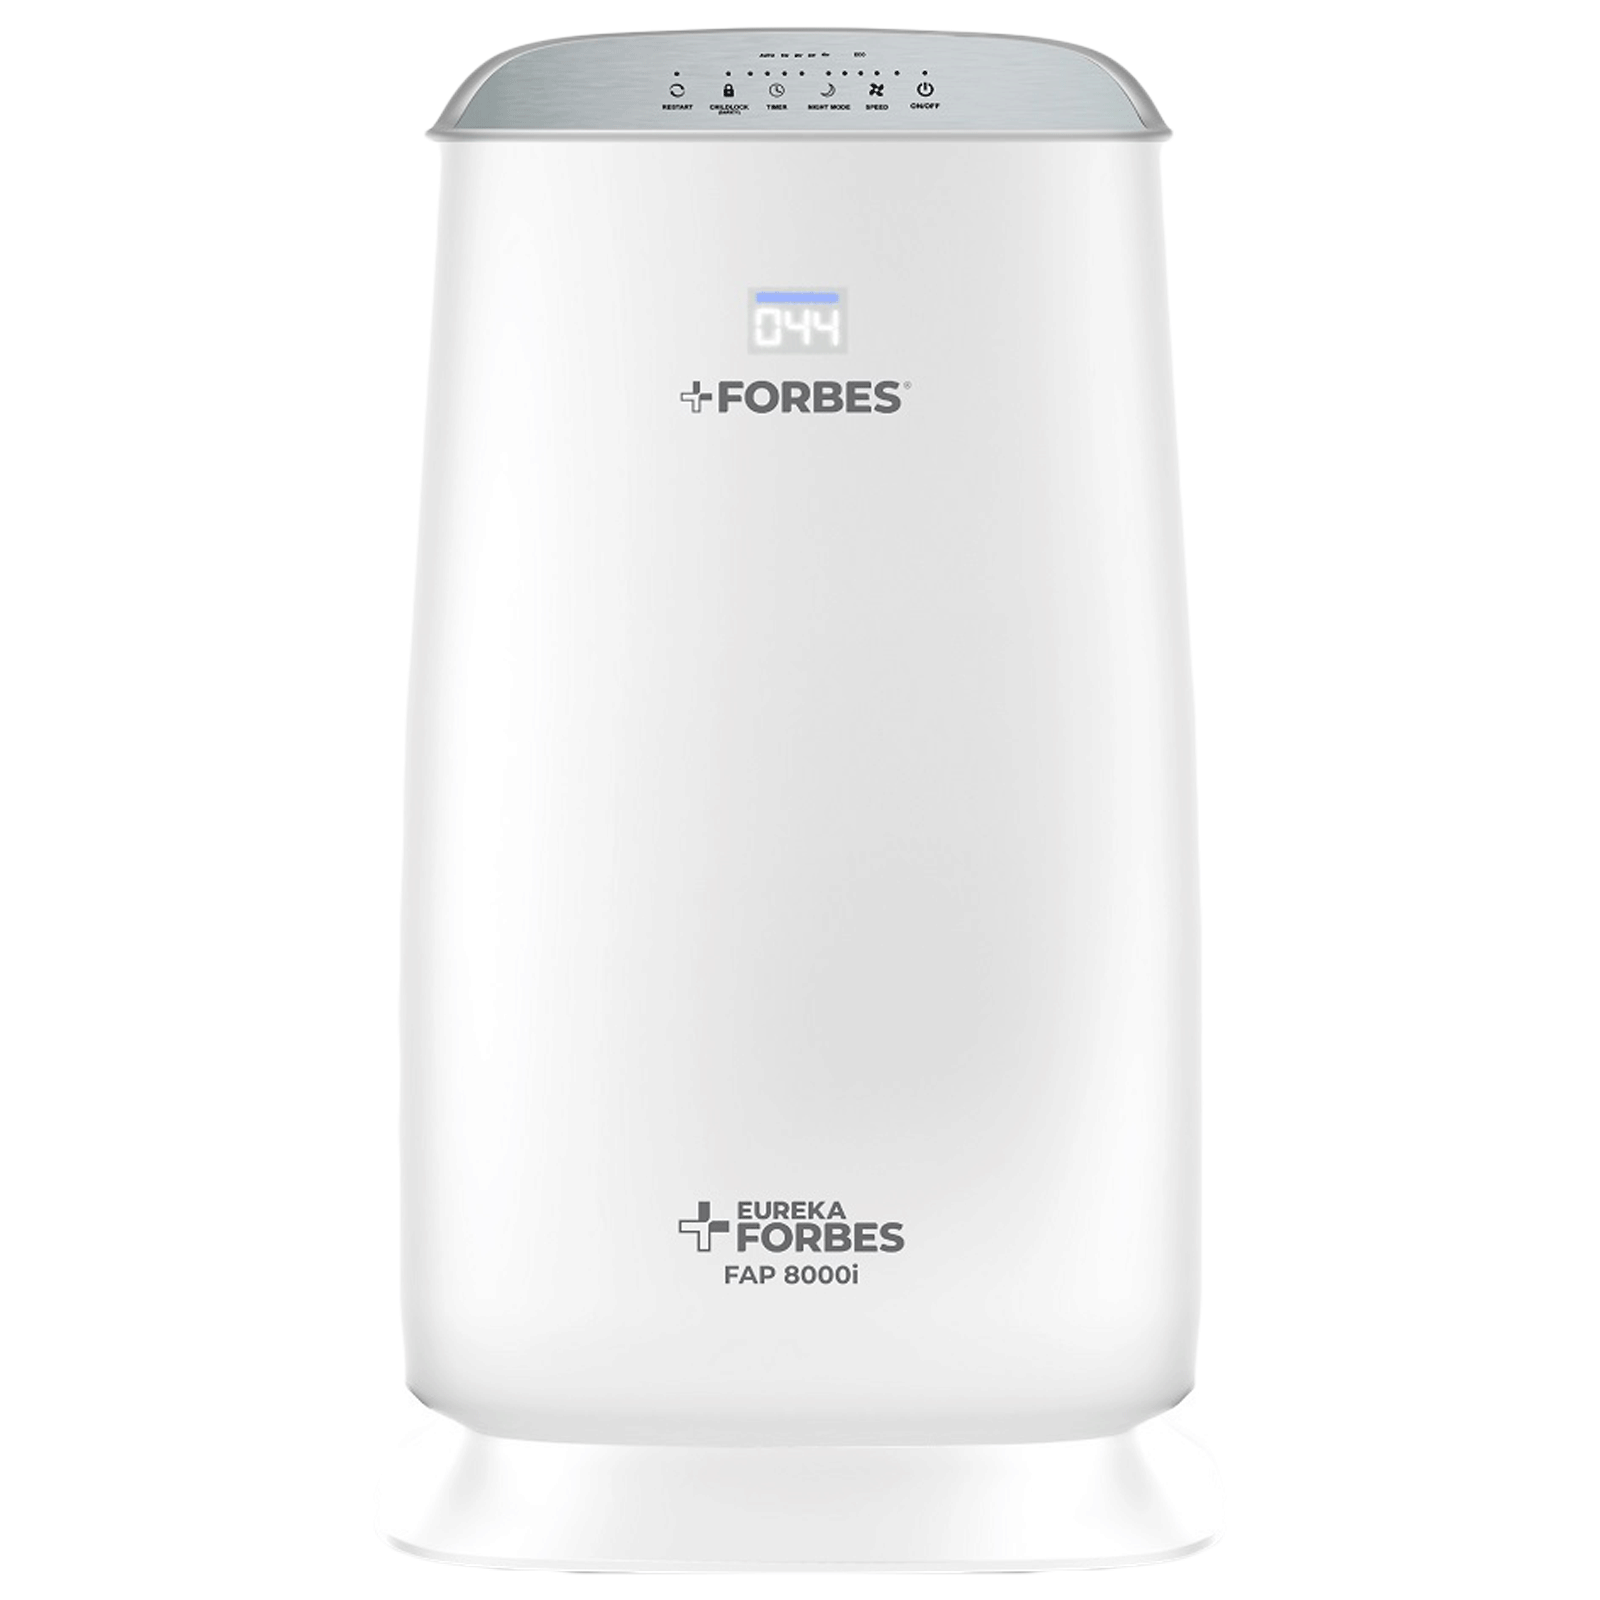  Eureka Forbes UV-C Technology Air Purifier (Carbon Filter, FAP 8000i, White)_1